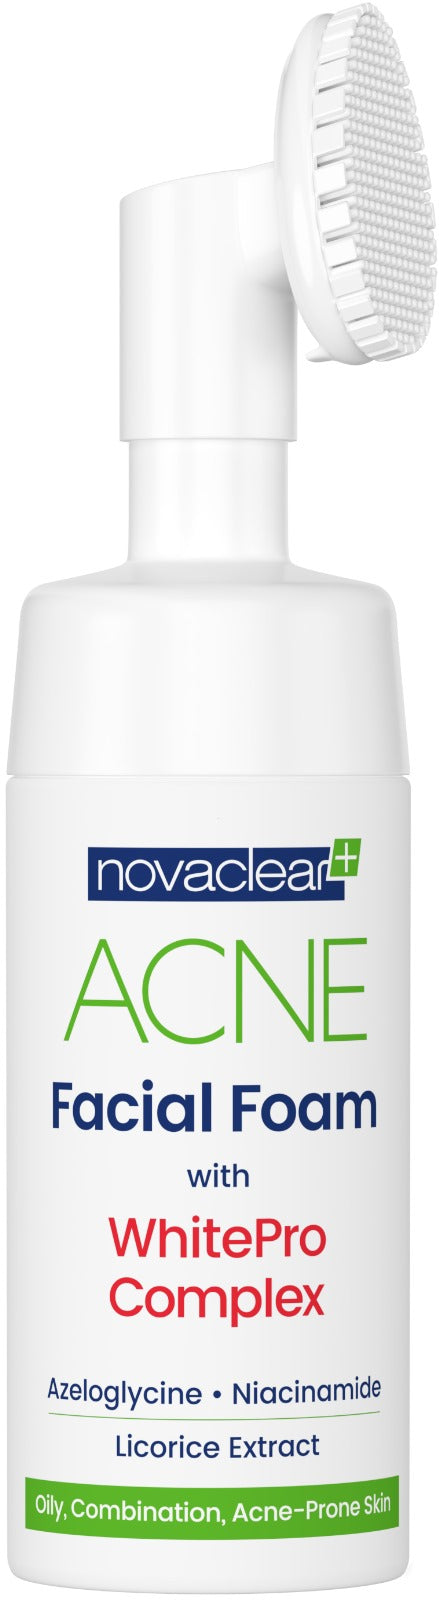 Novaclear ACNE Facial Foam with WhitePro Complex 100ml